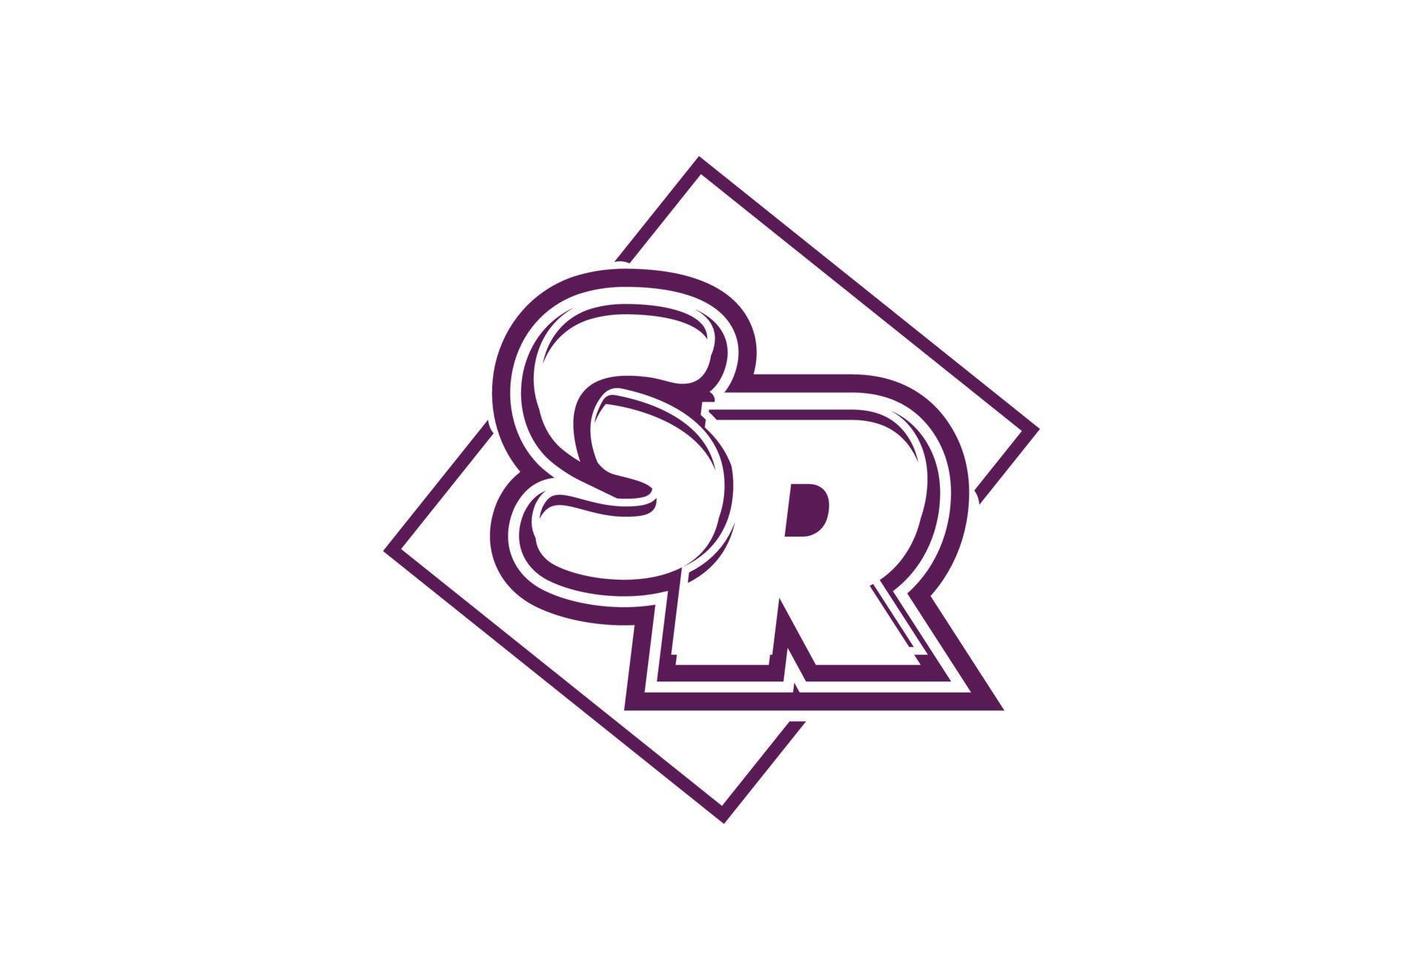 SR letter logo and icon design template vector